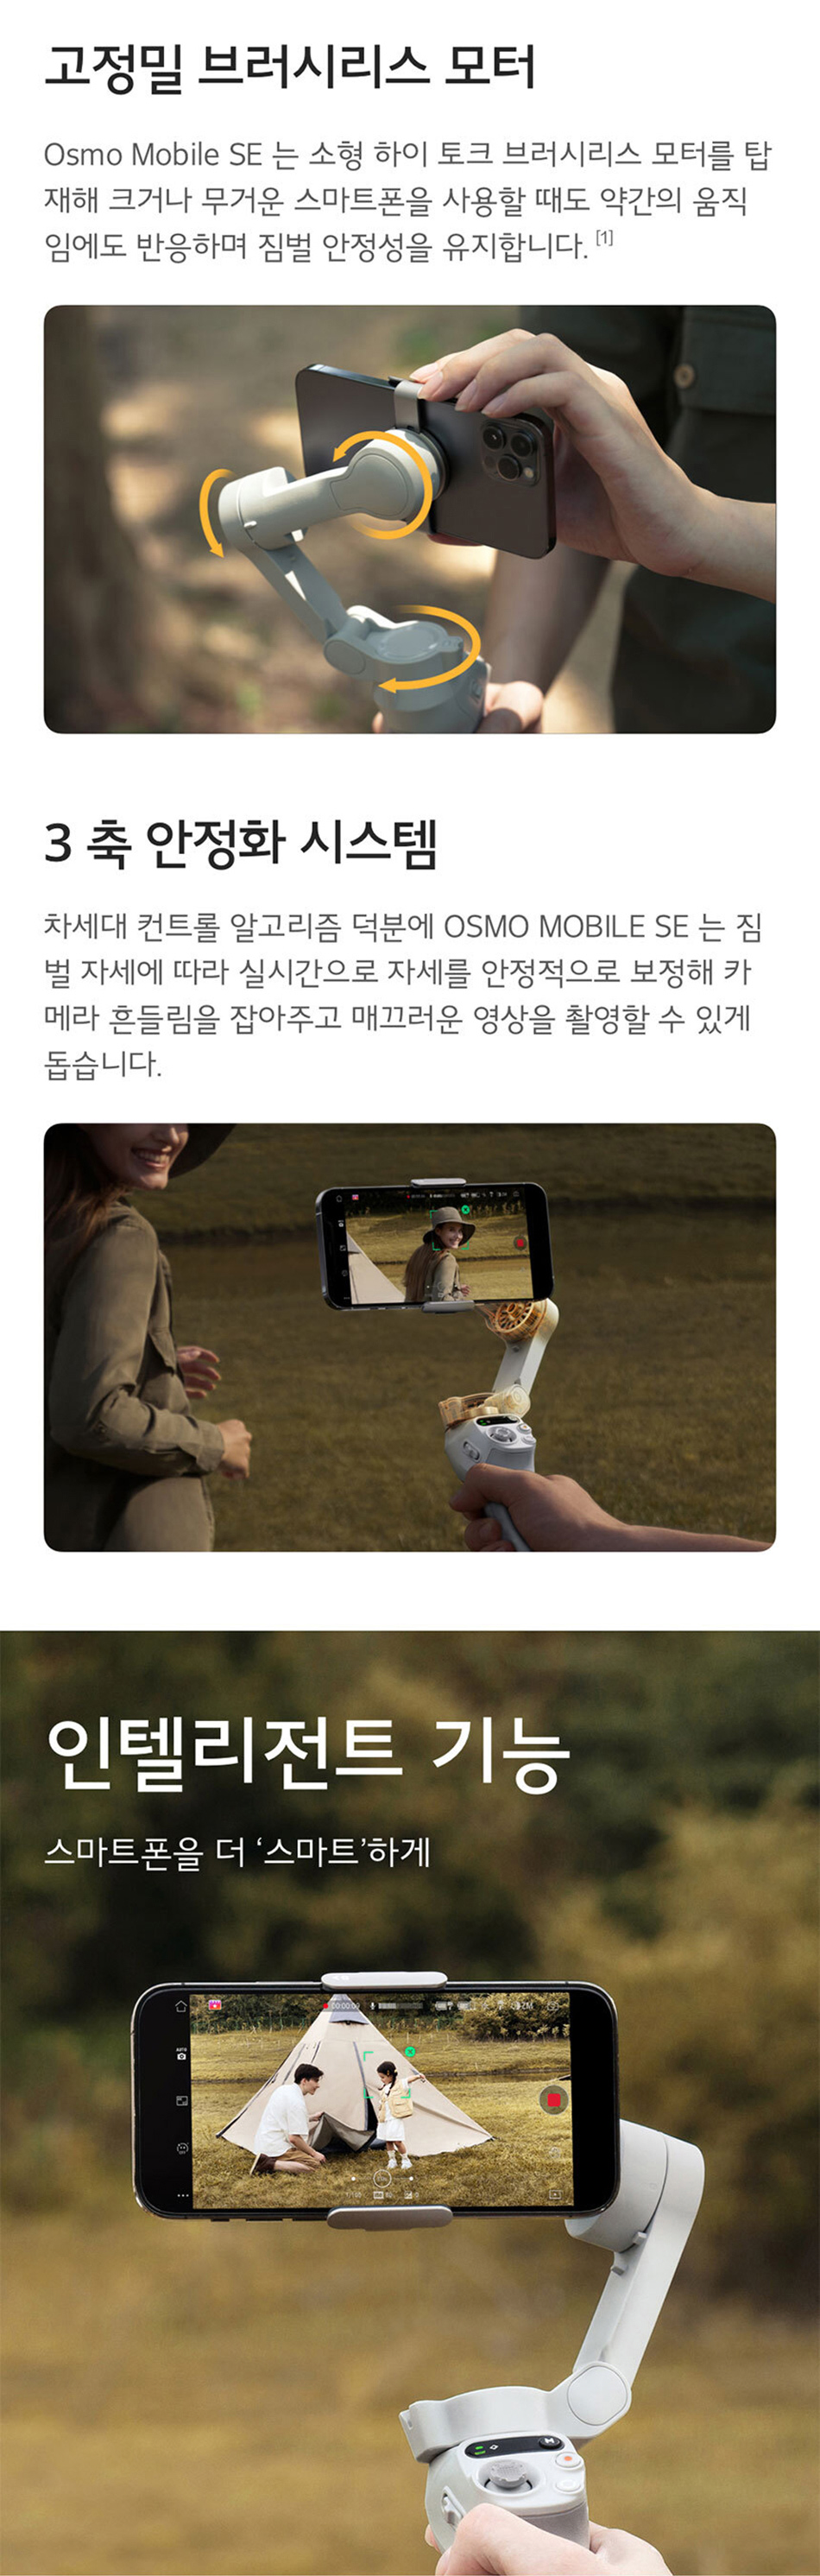 osmo_mobile_se_04.jpg